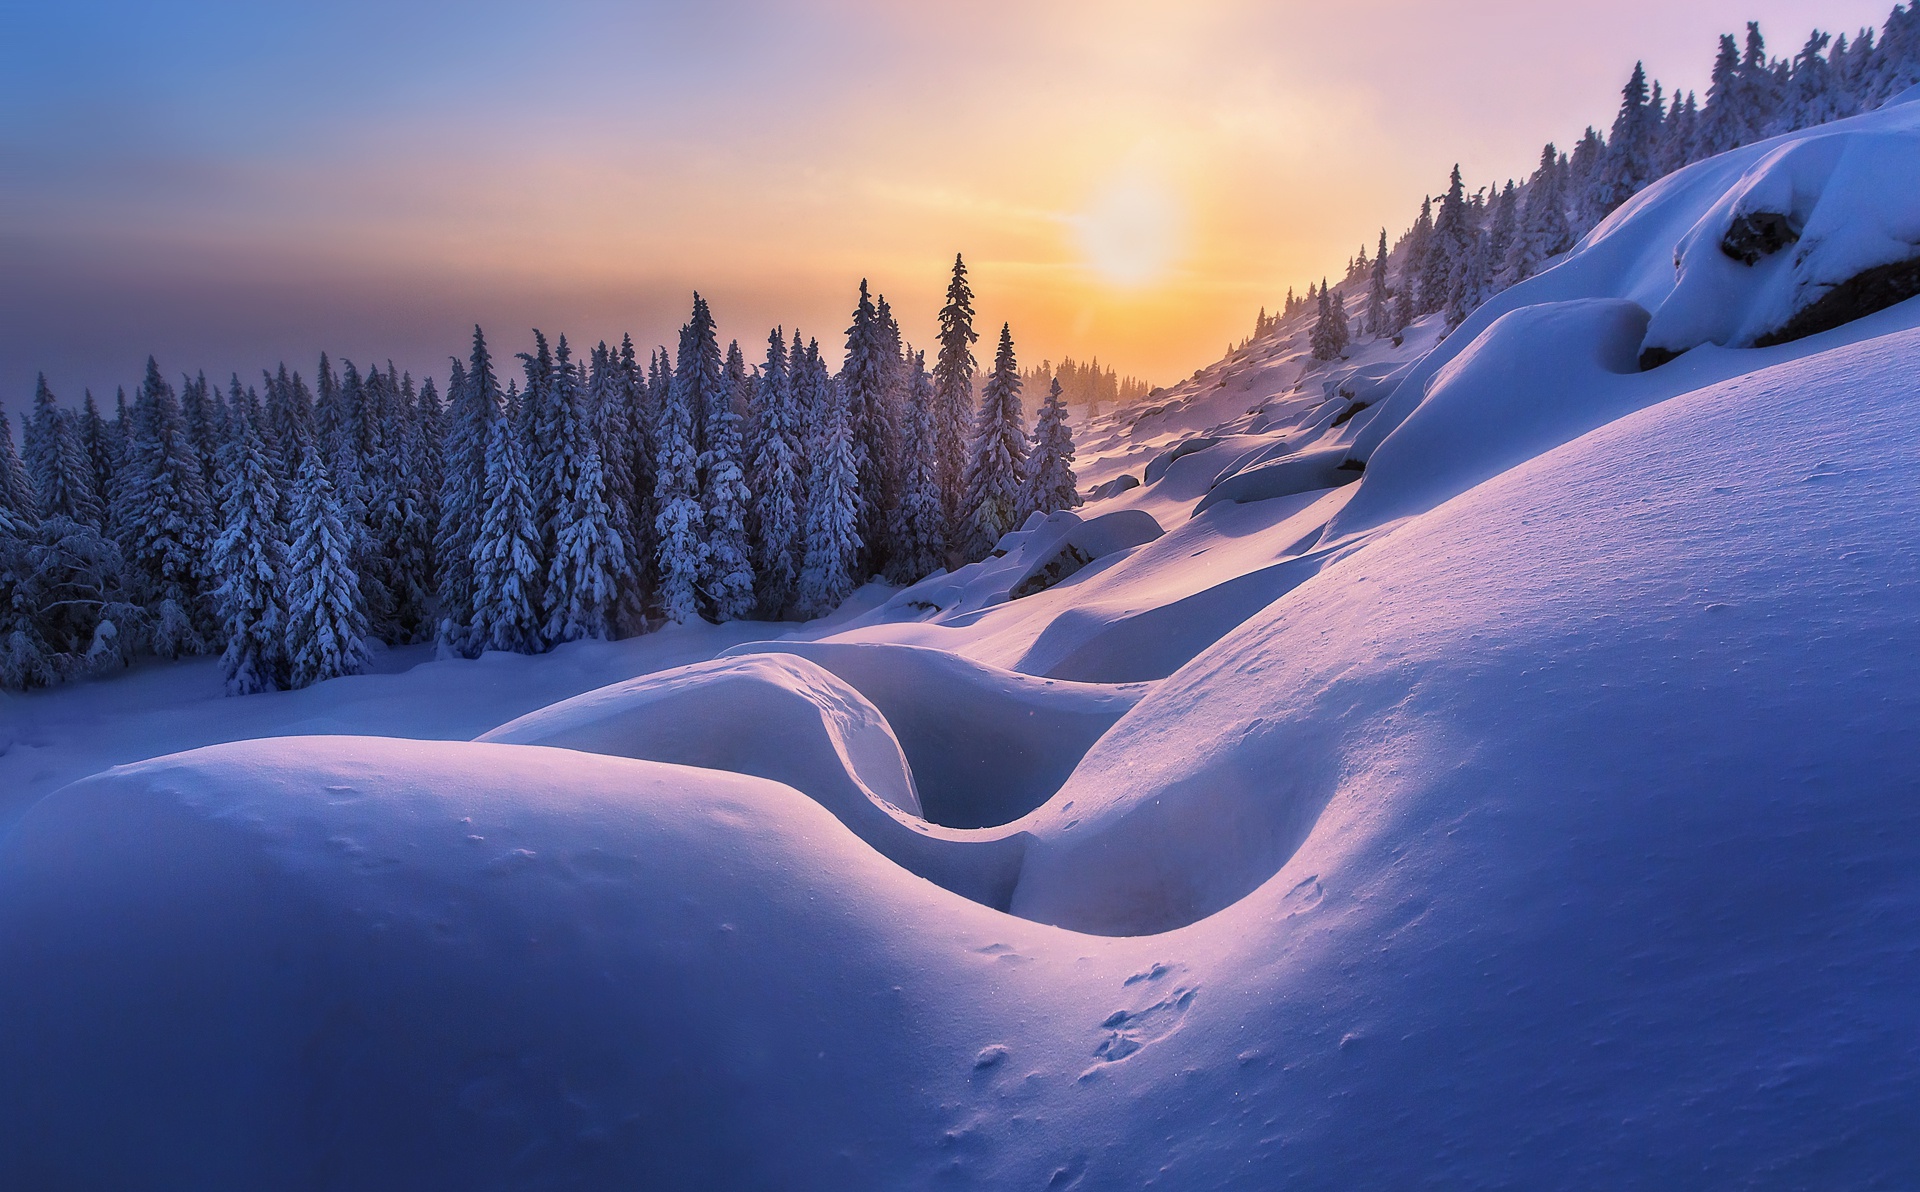 Winter Landscape Pictures Stunning  Download Free Images on Unsplash